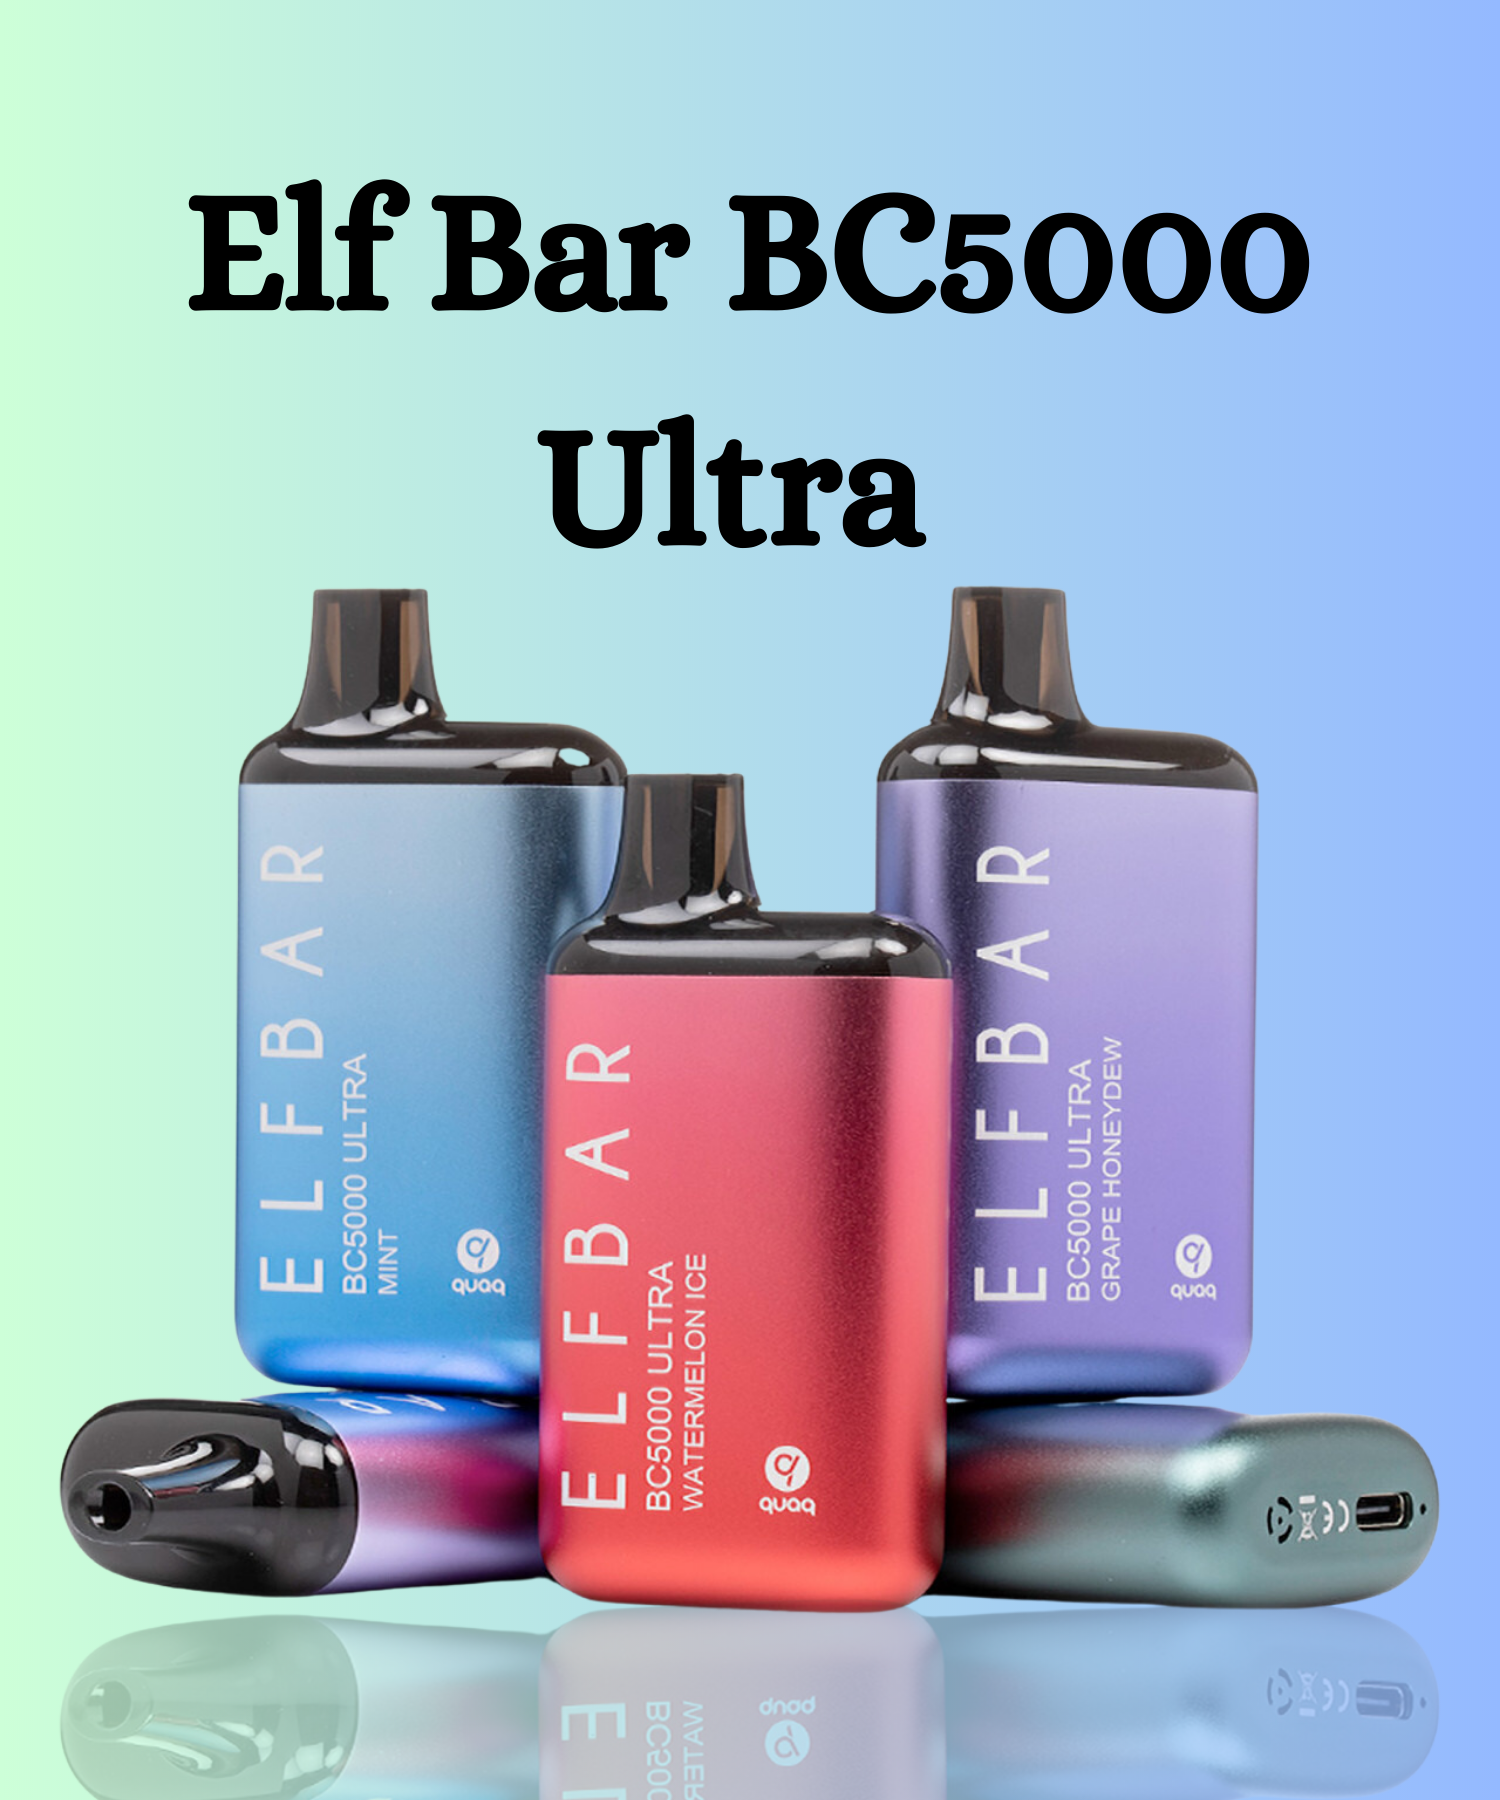 Elf Bar BC5000 Ultra